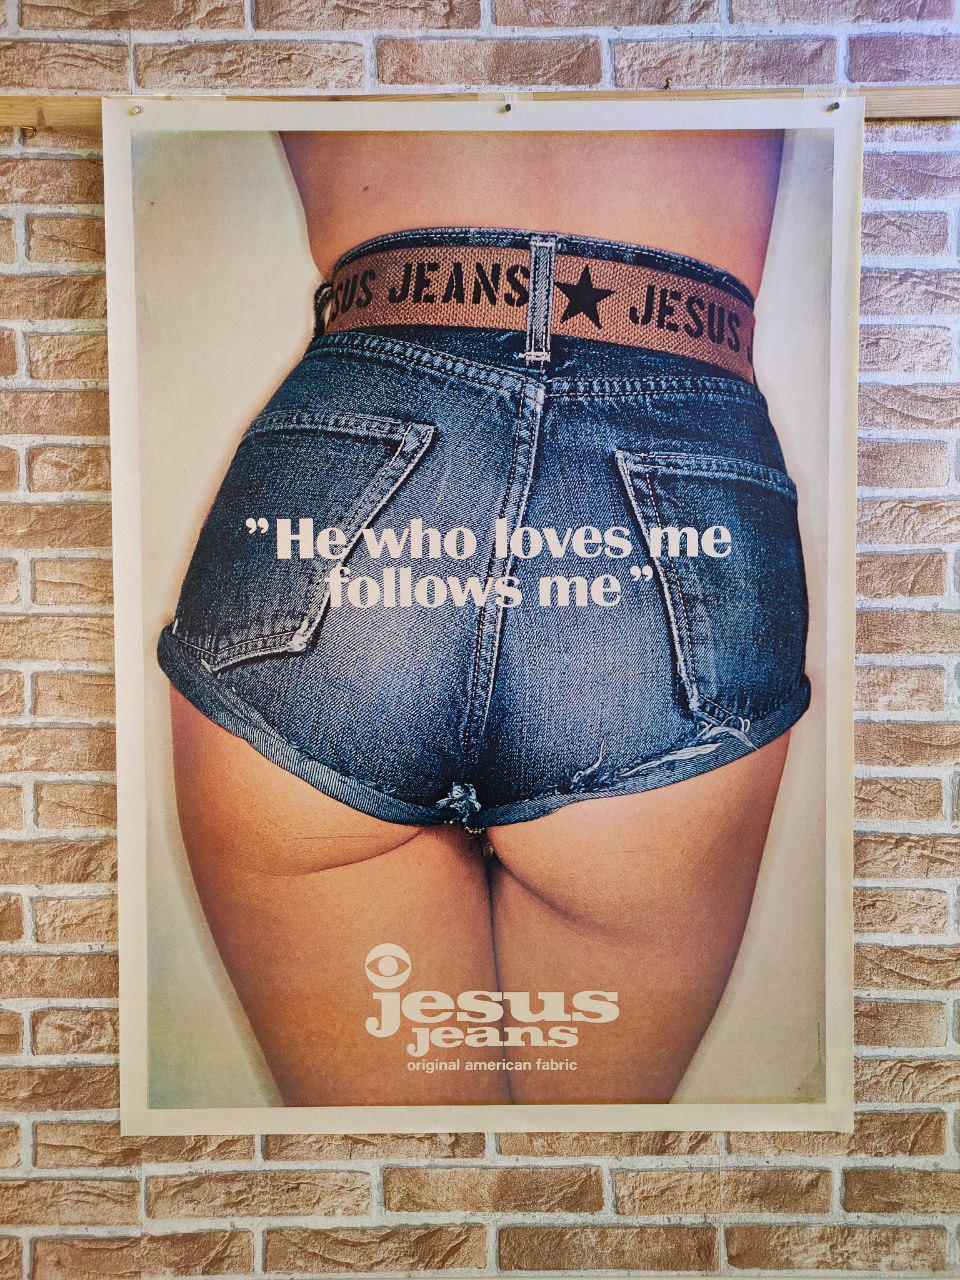 Manifesto originale pubblicitario - Jesus Jeans "Chi mi ama mi segua"